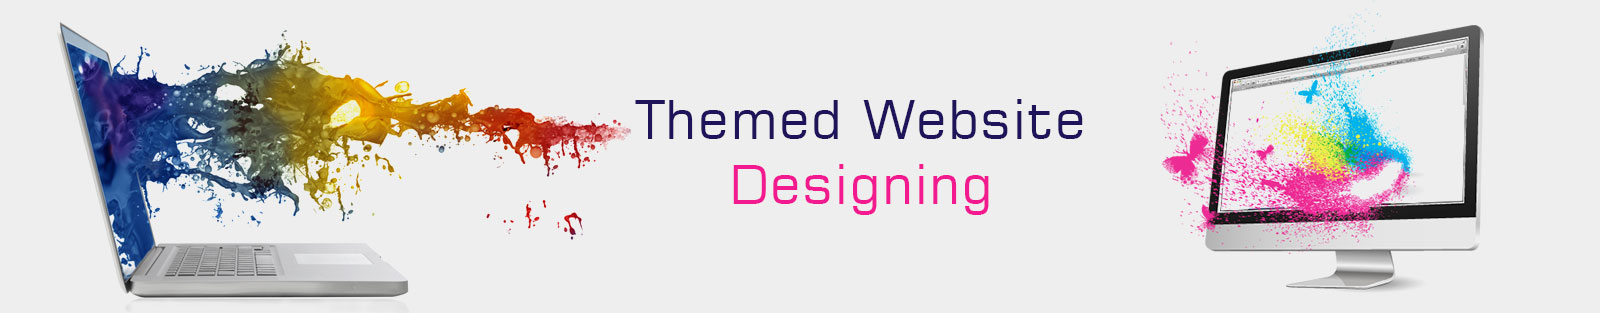 Themed Website Designing